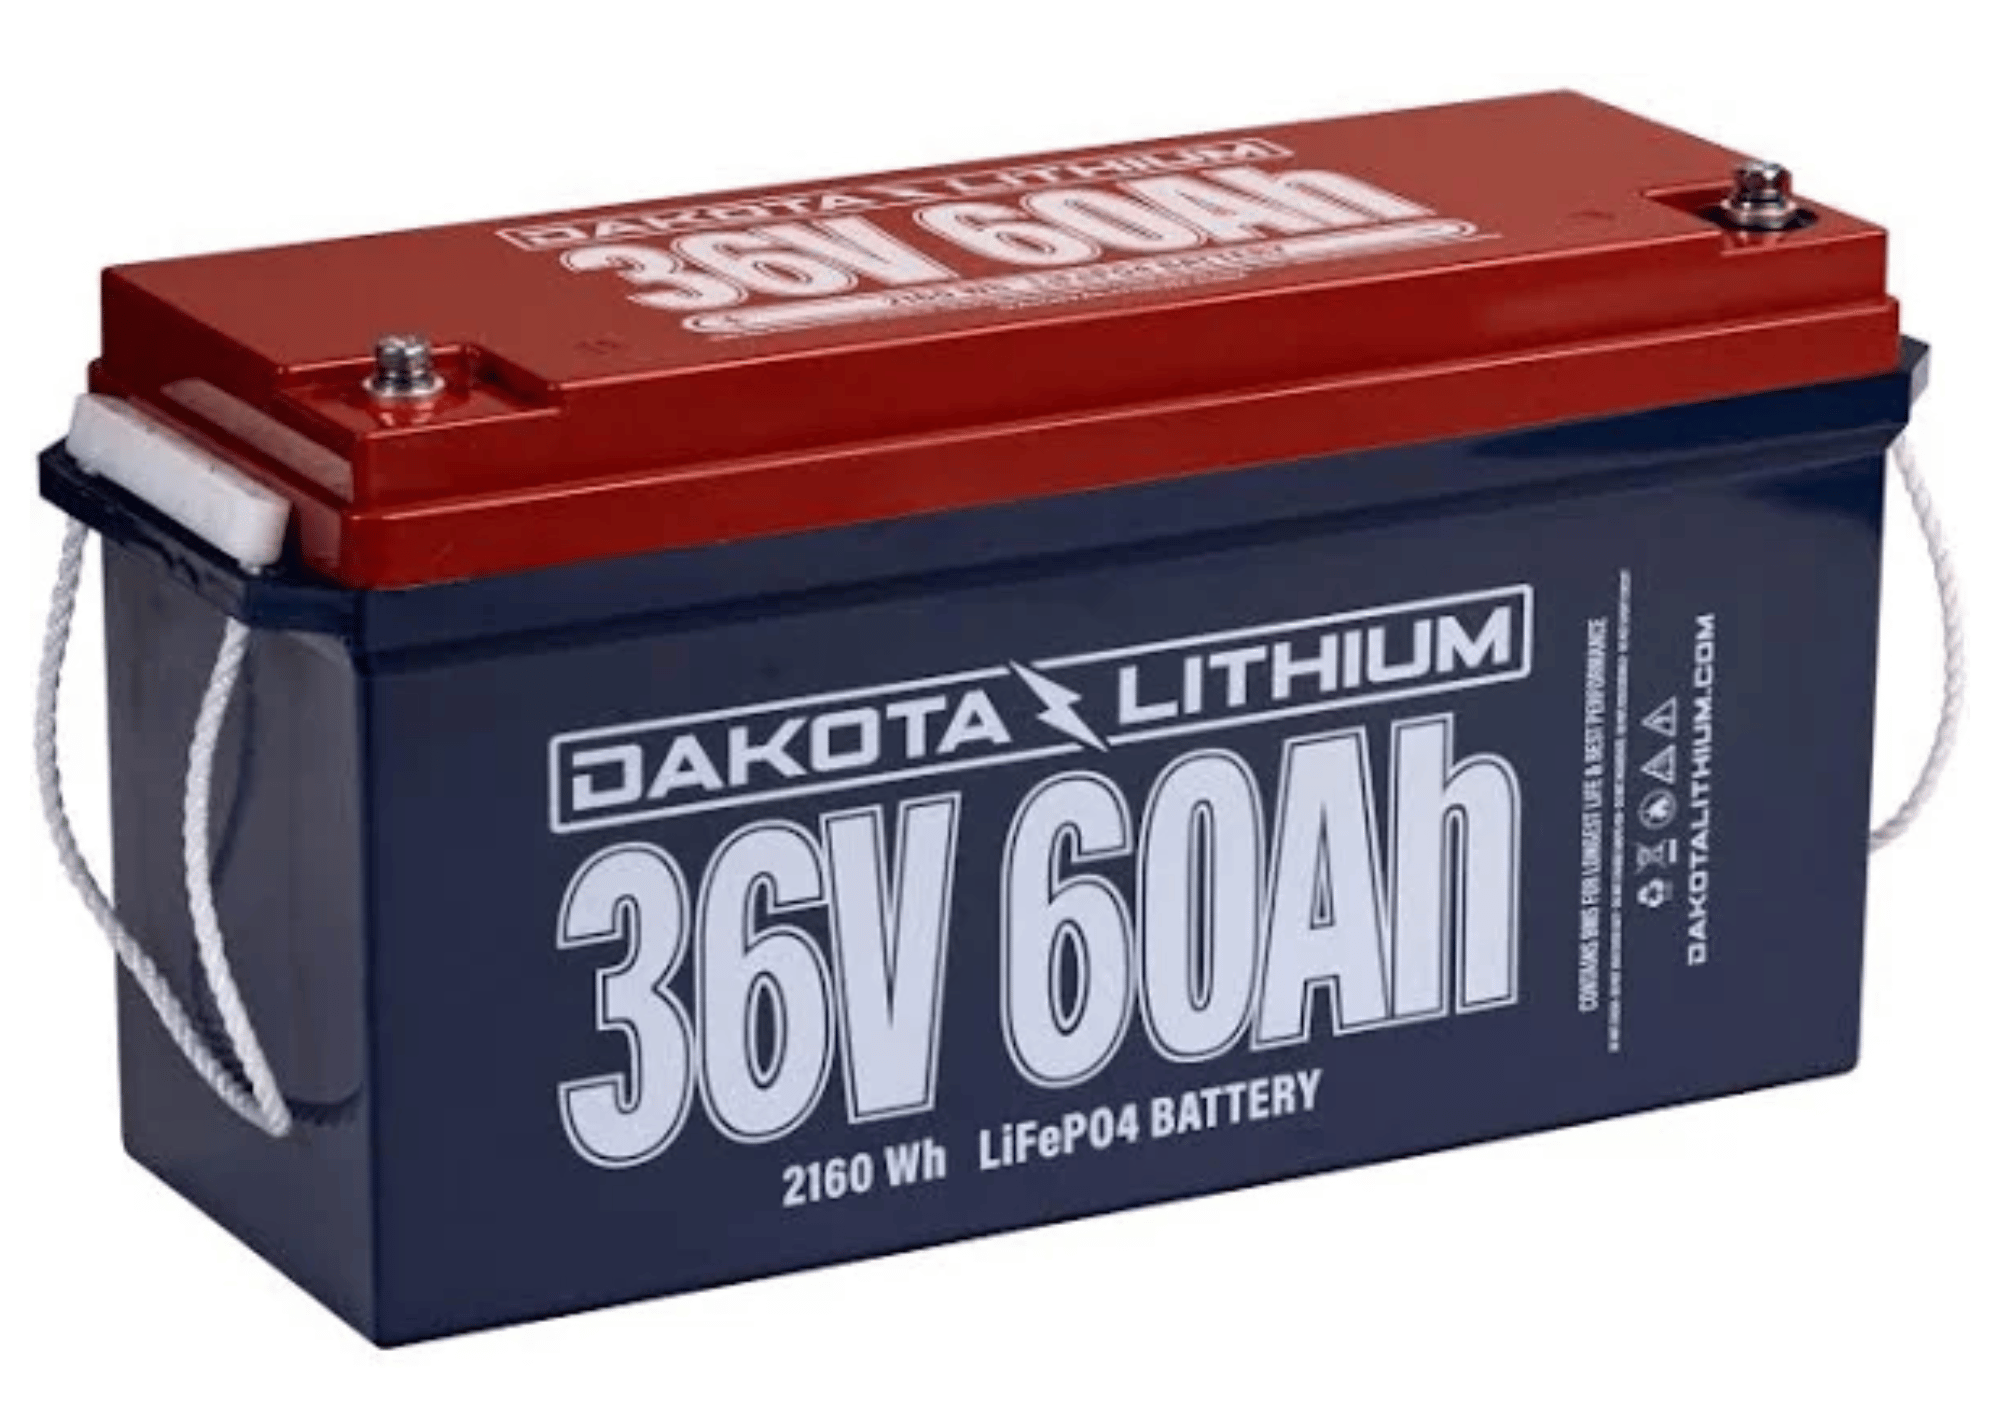 Battery Collection - Dakota Lithium Batteries